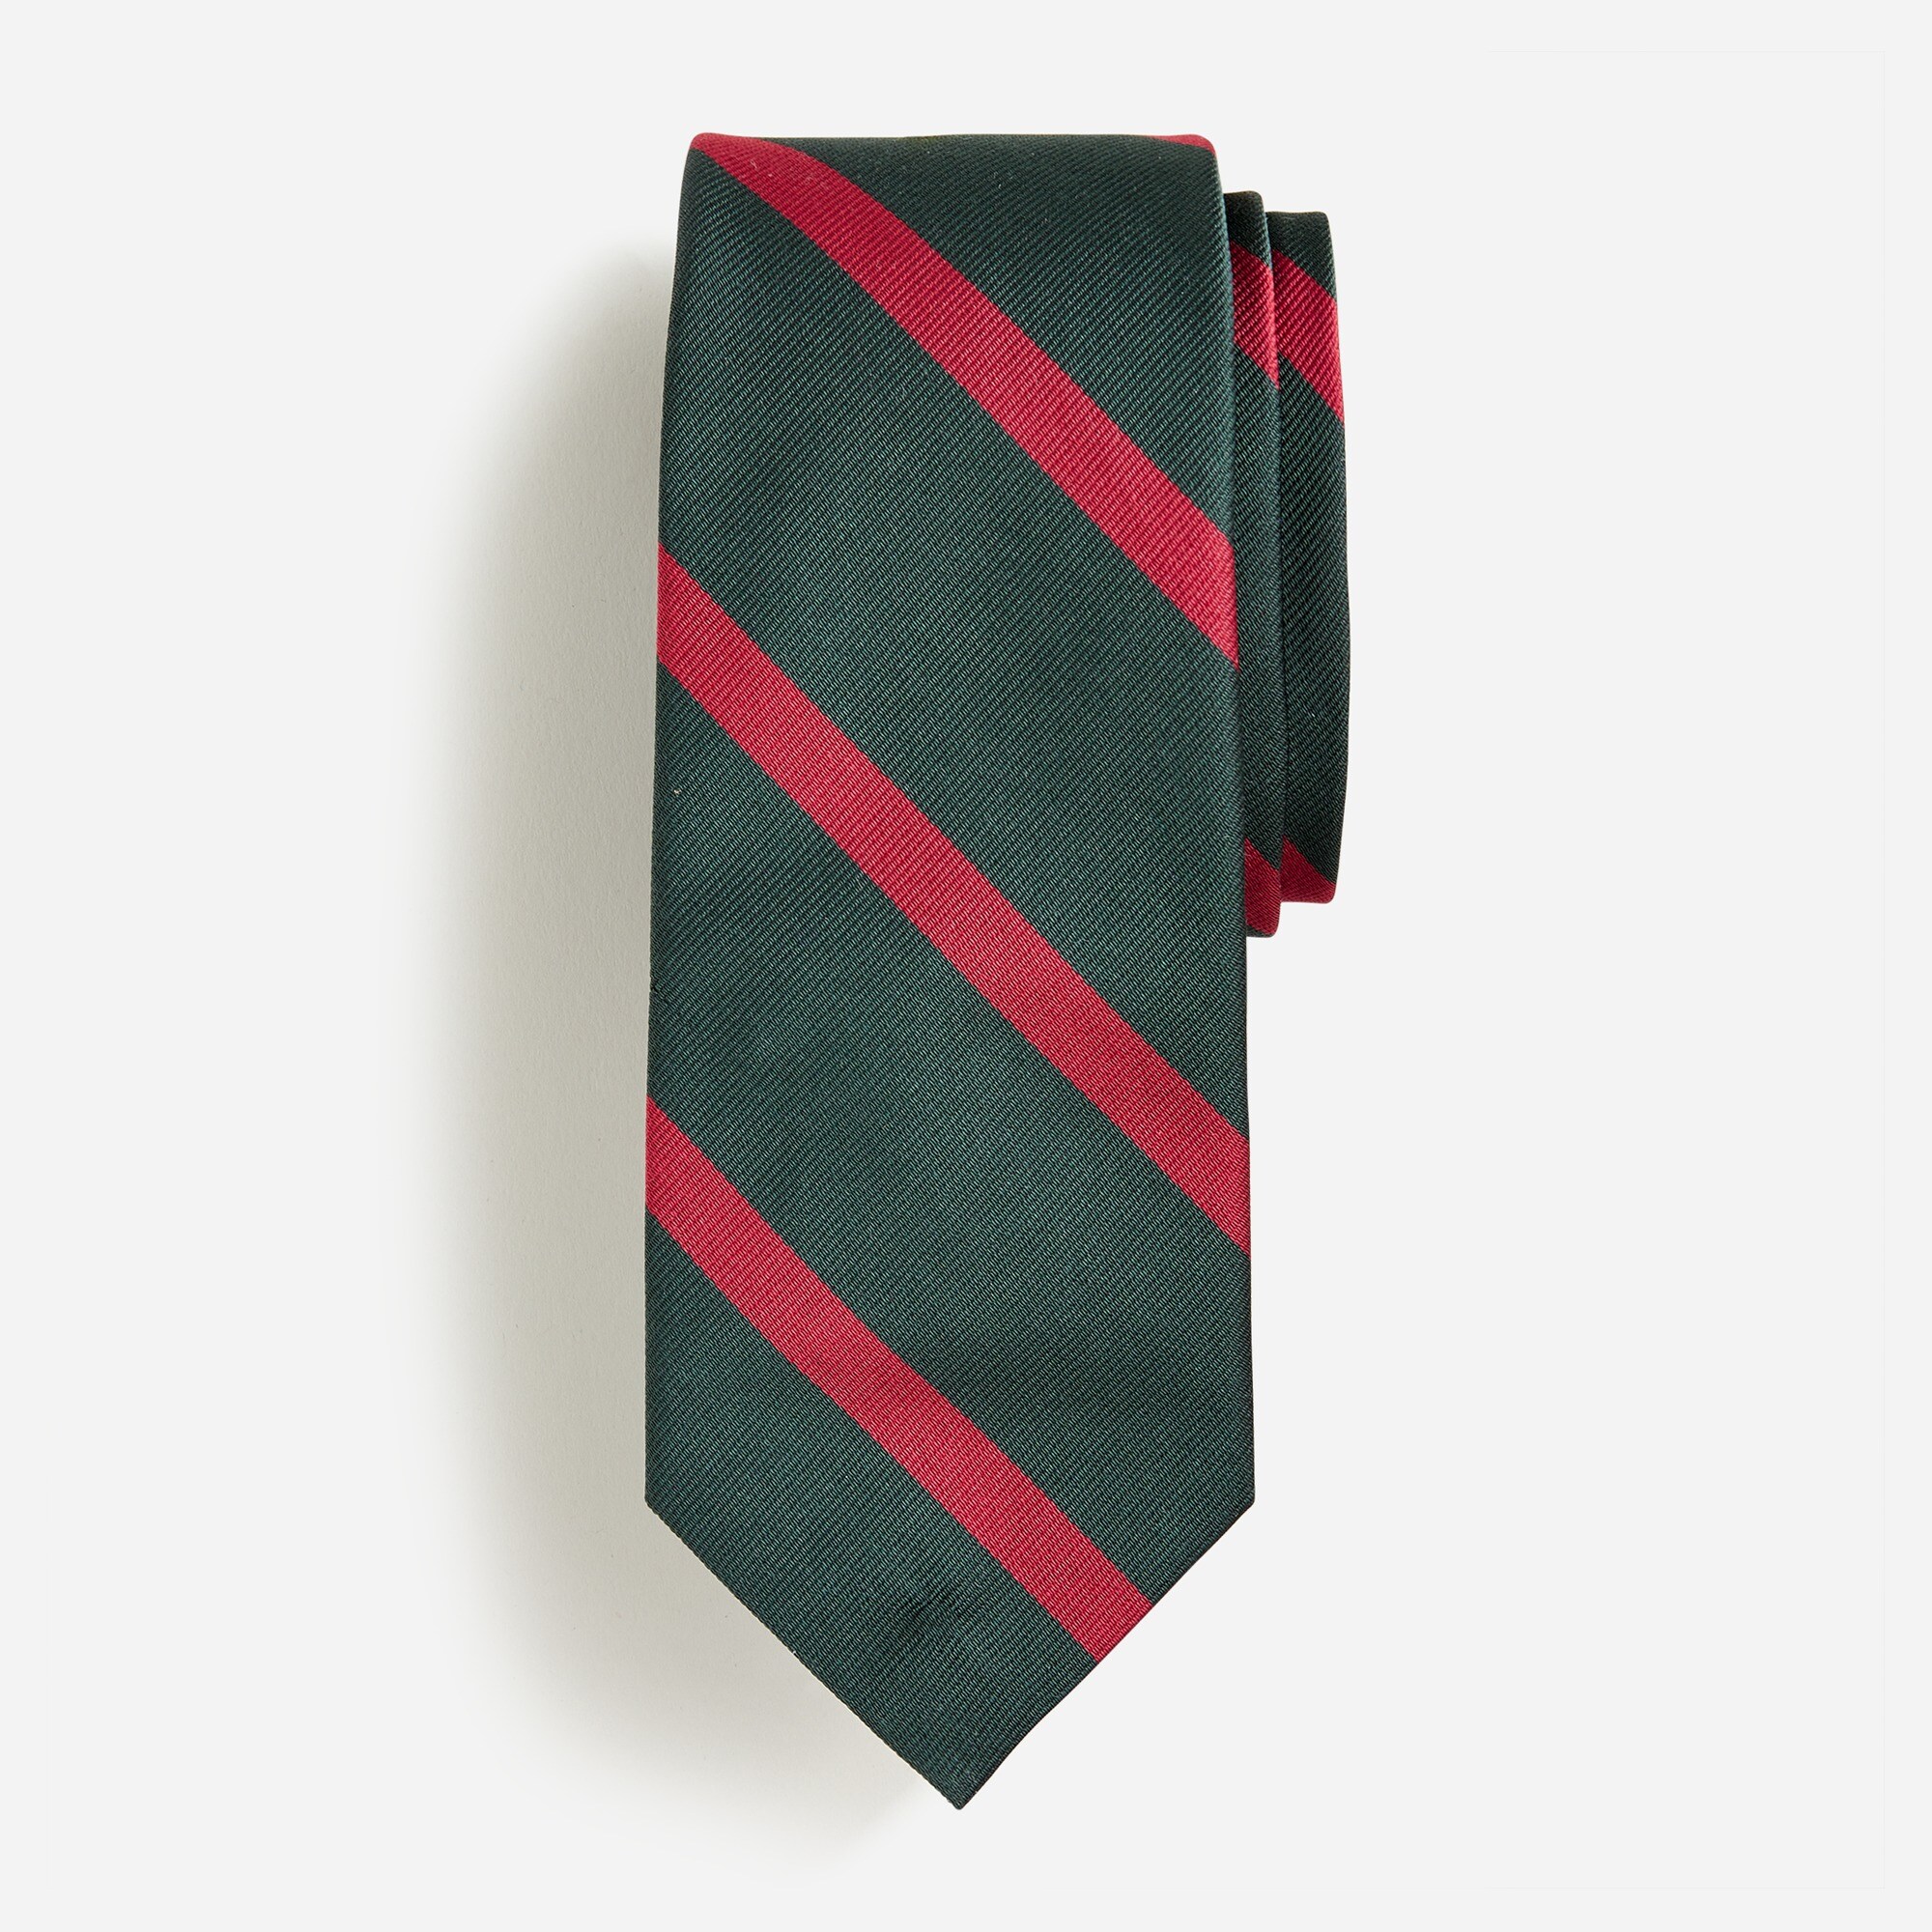  English silk tie in diagonal stripe